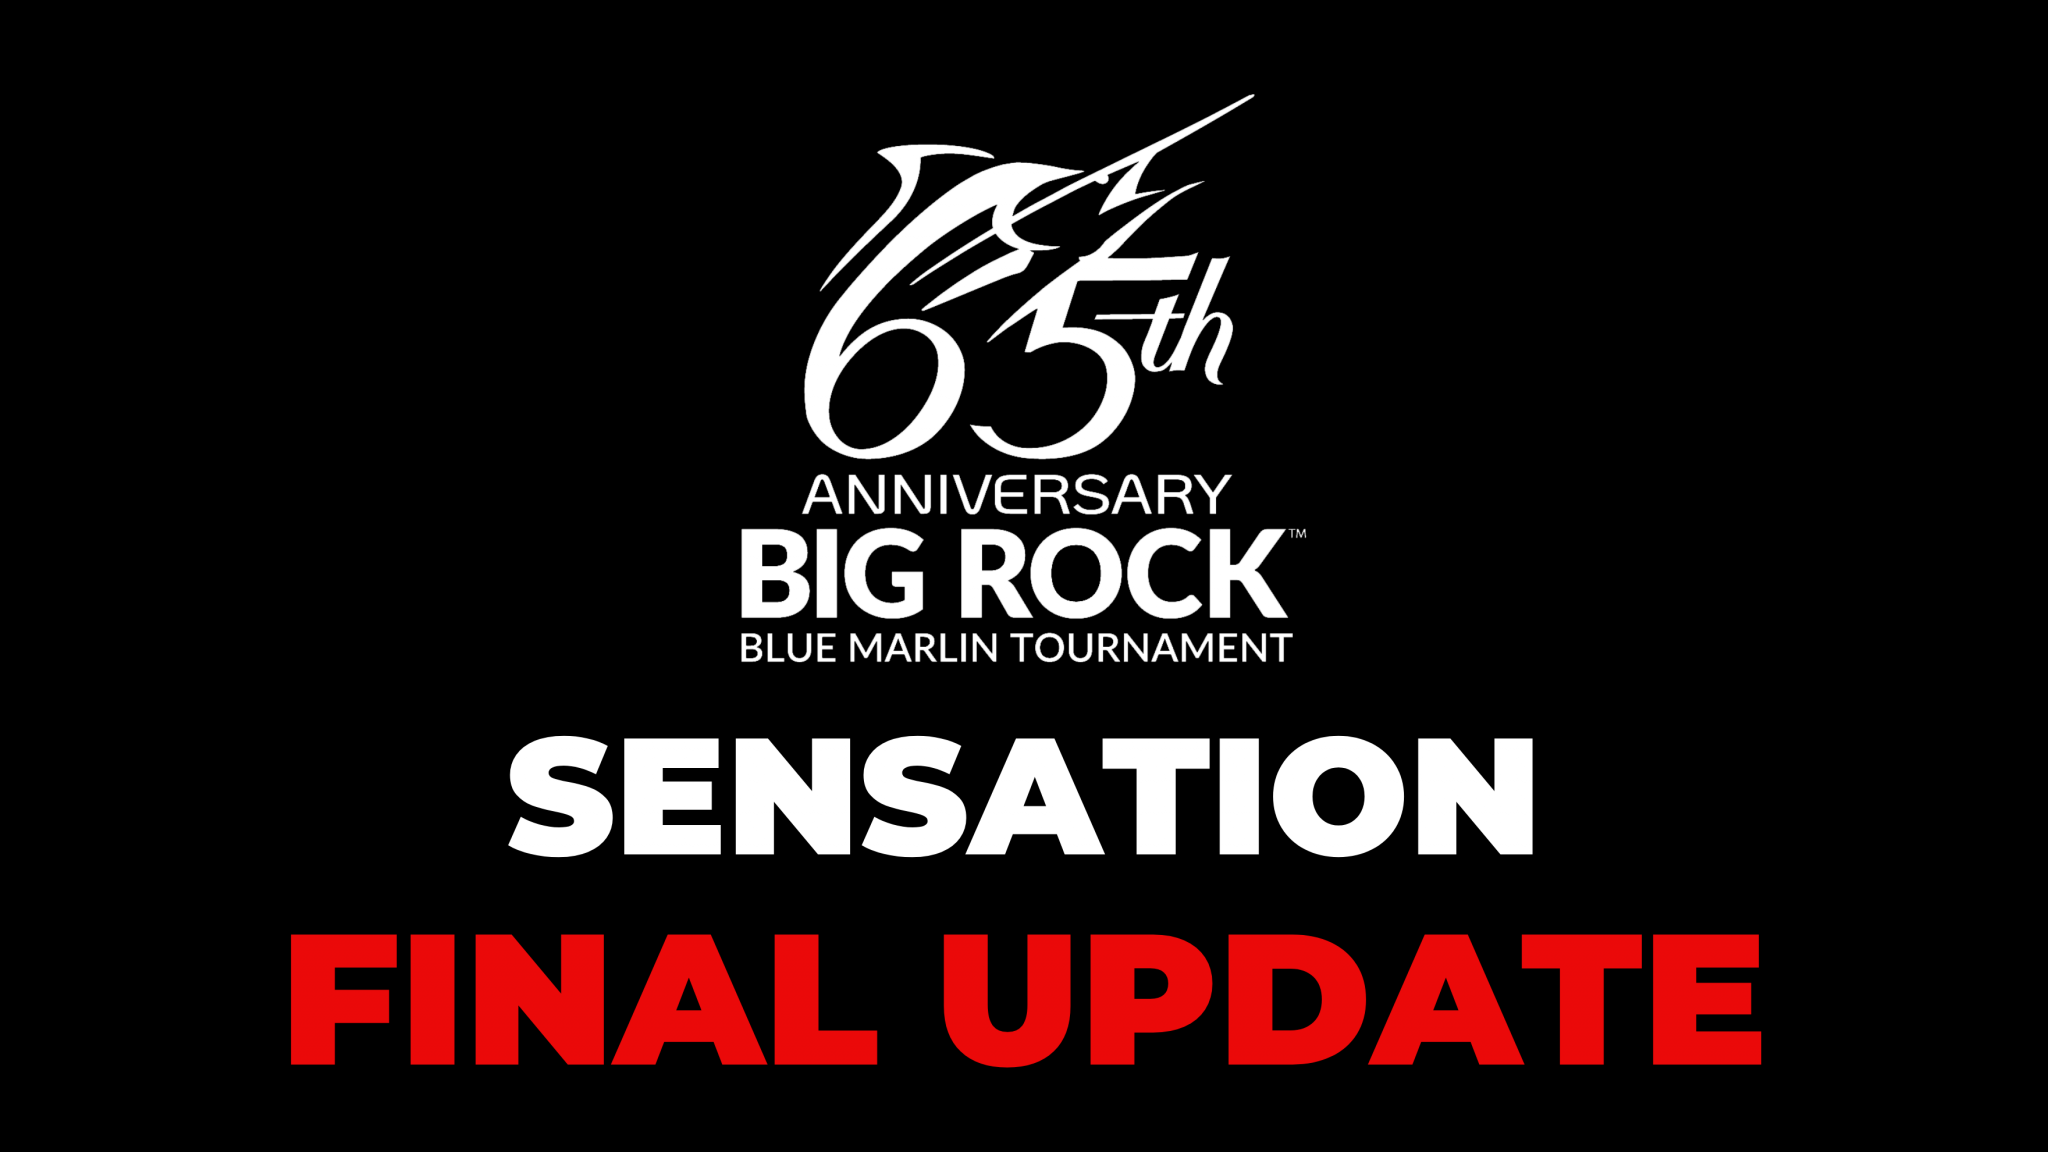 SENSATION FINAL UPDATE BIG ROCK TOURNAMENT The Big Rock Tournament